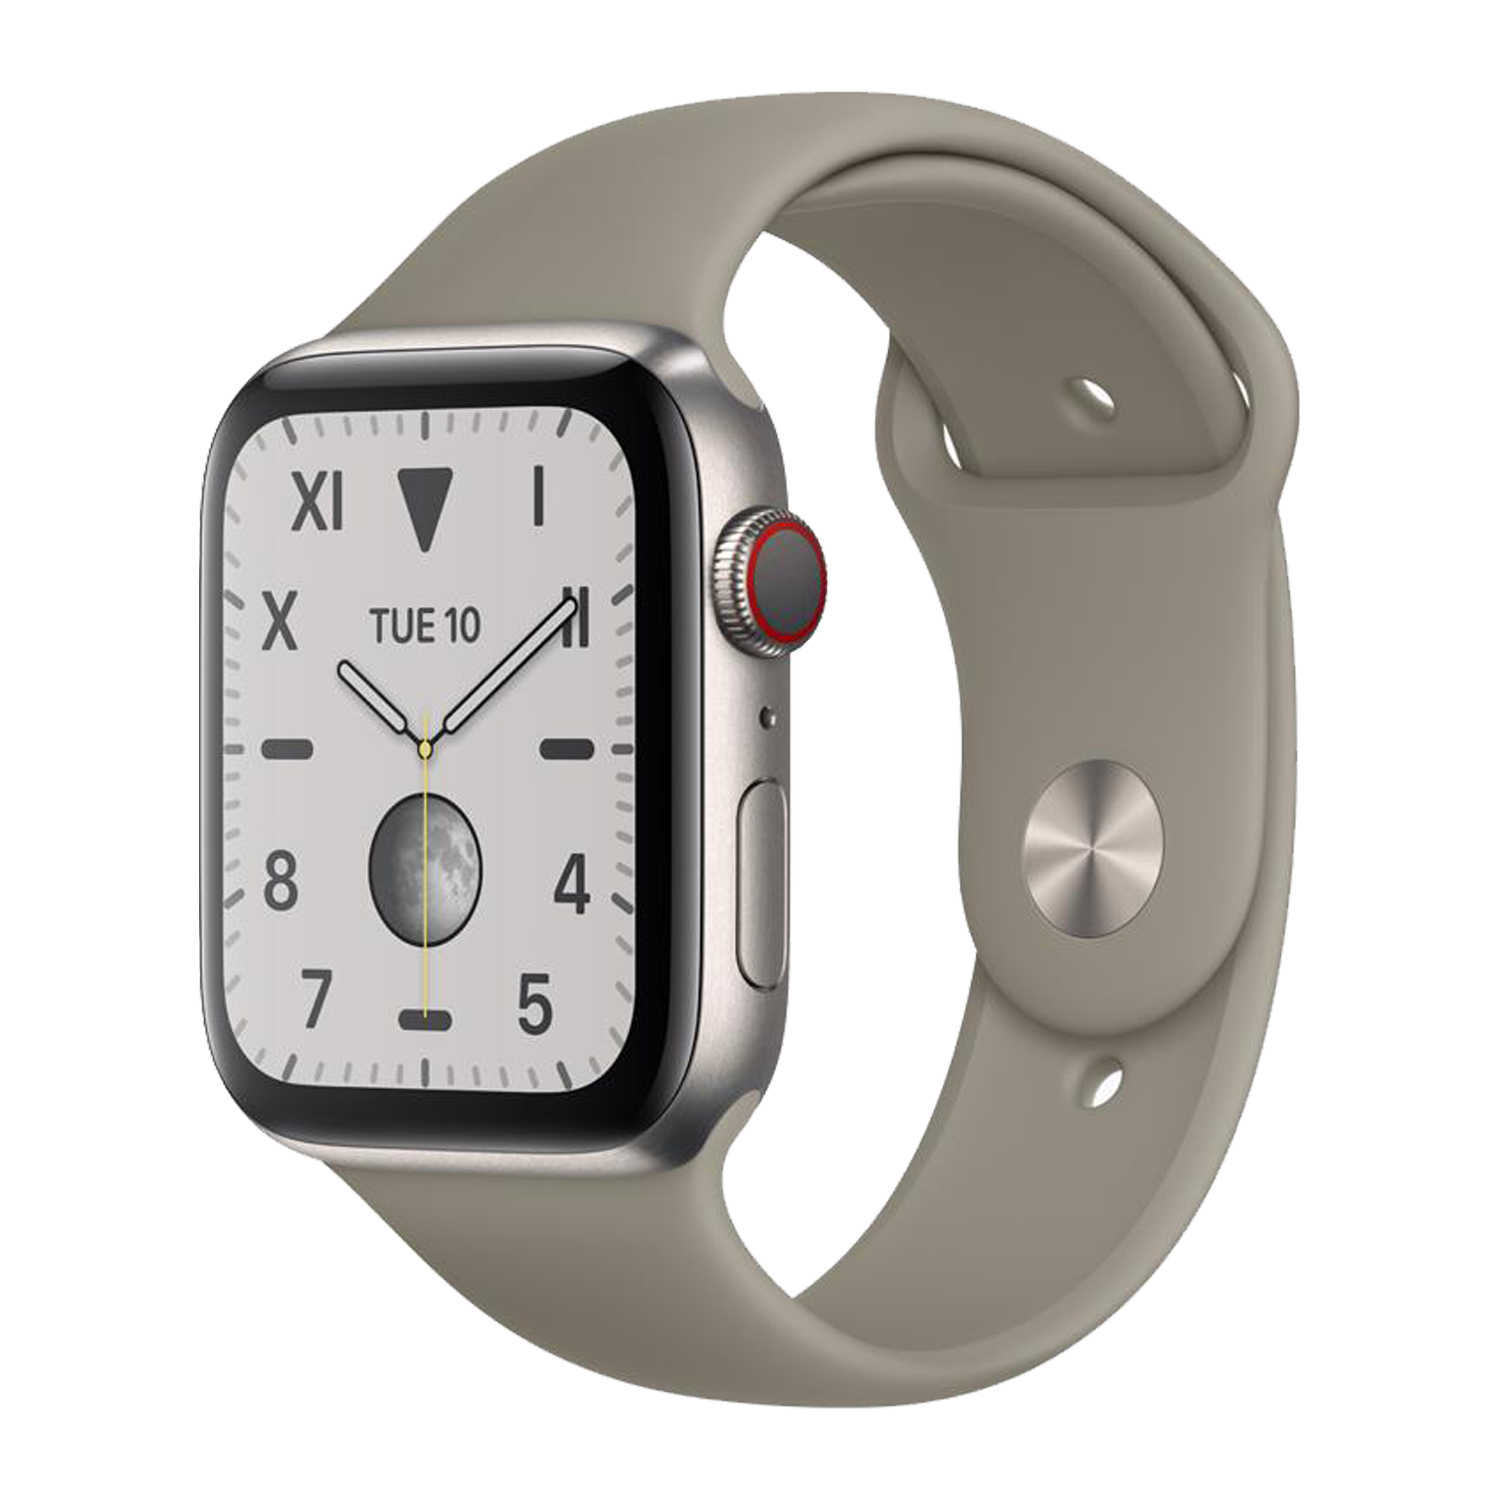 Apple Watch Series 5 Accessories